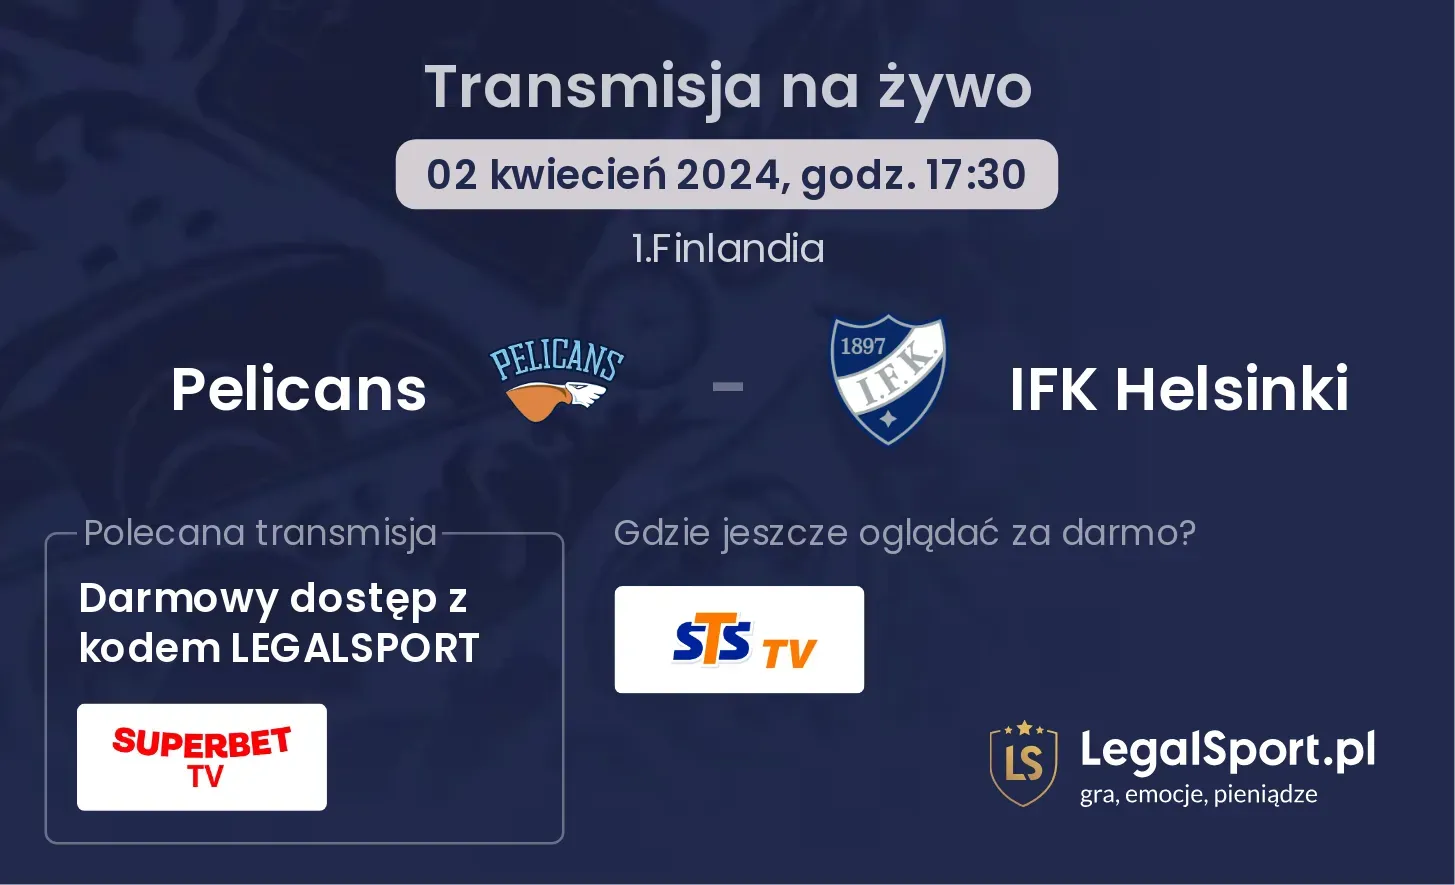 Pelicans - IFK Helsinki transmisja na żywo